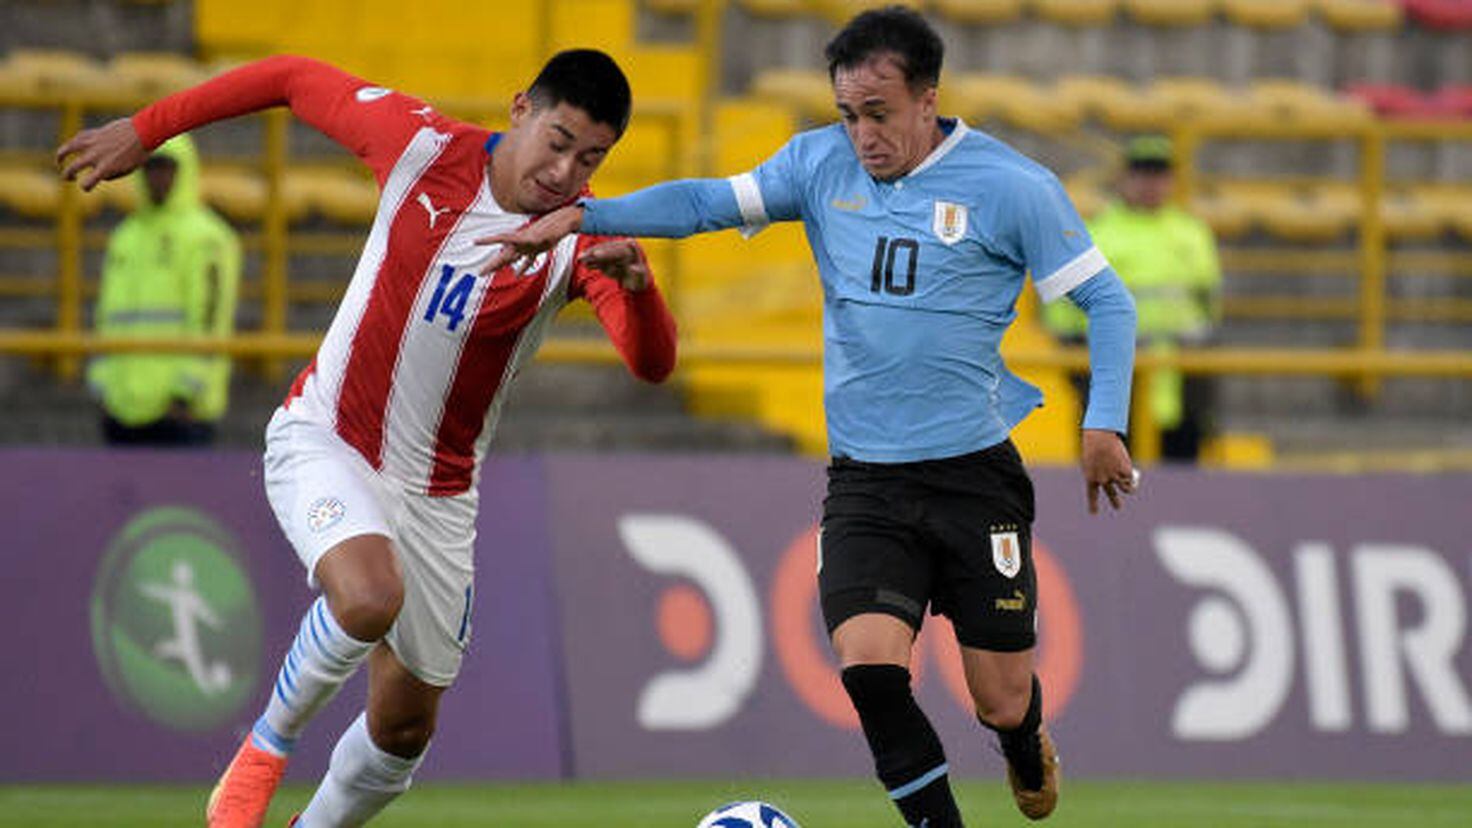 Uruguay S20 1-0 Paraguay Sub 20 (9 de Feb., 2023) Análisis del